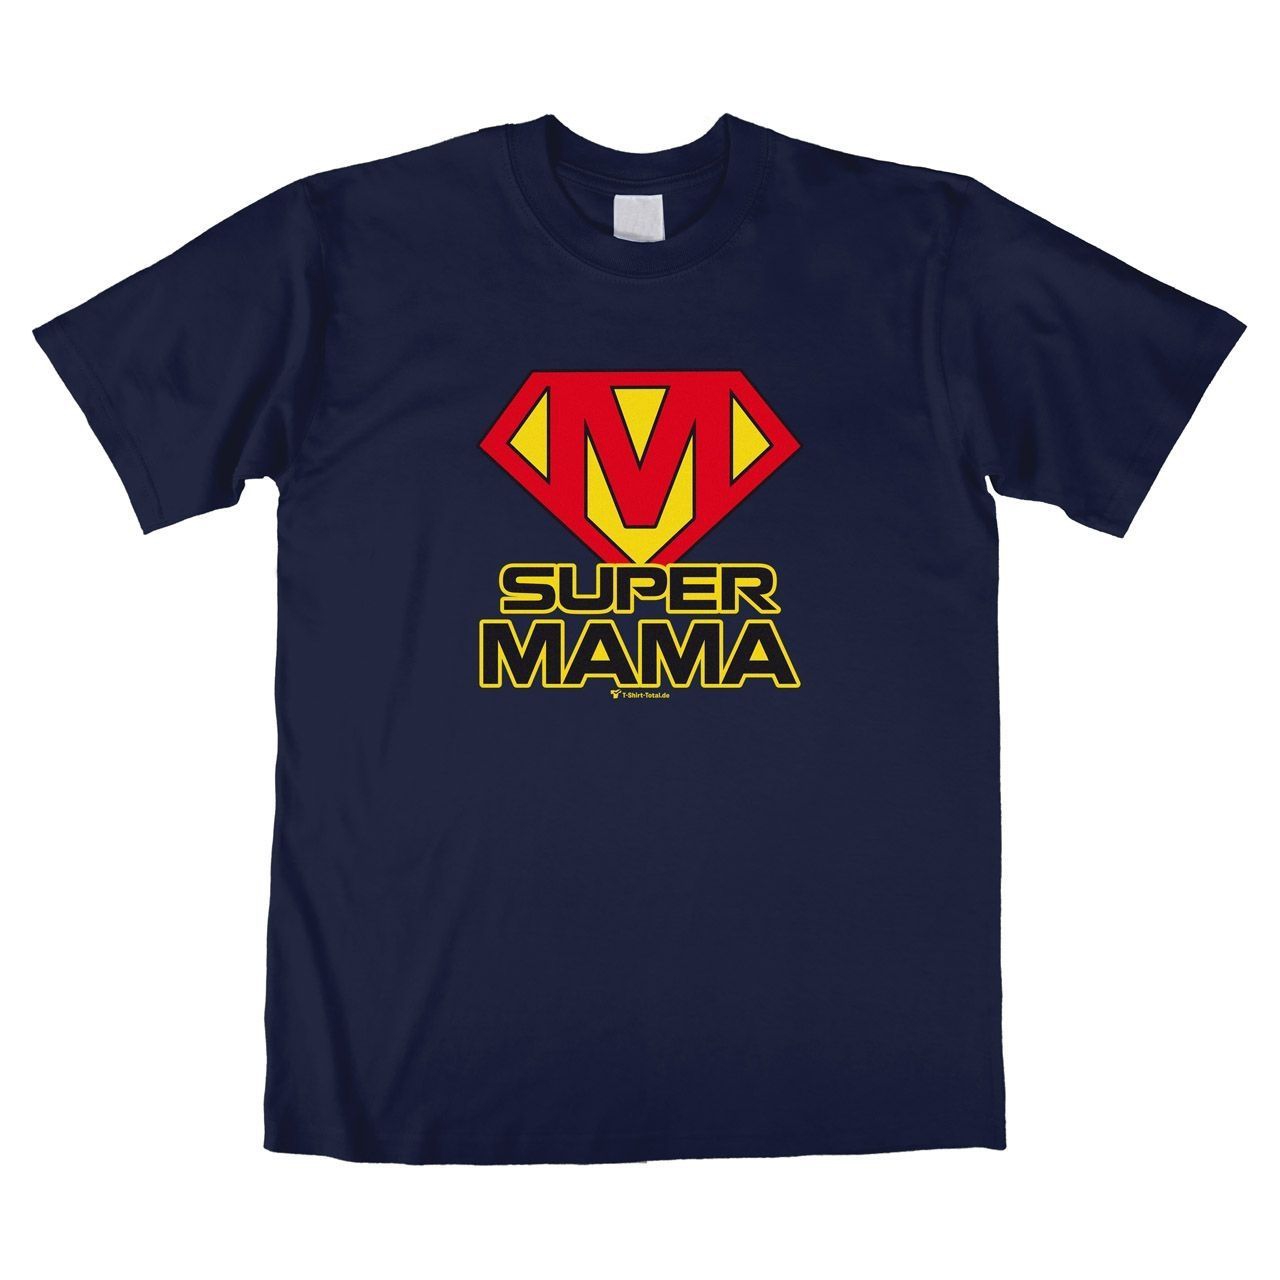 Super Mama Unisex T-Shirt navy Small